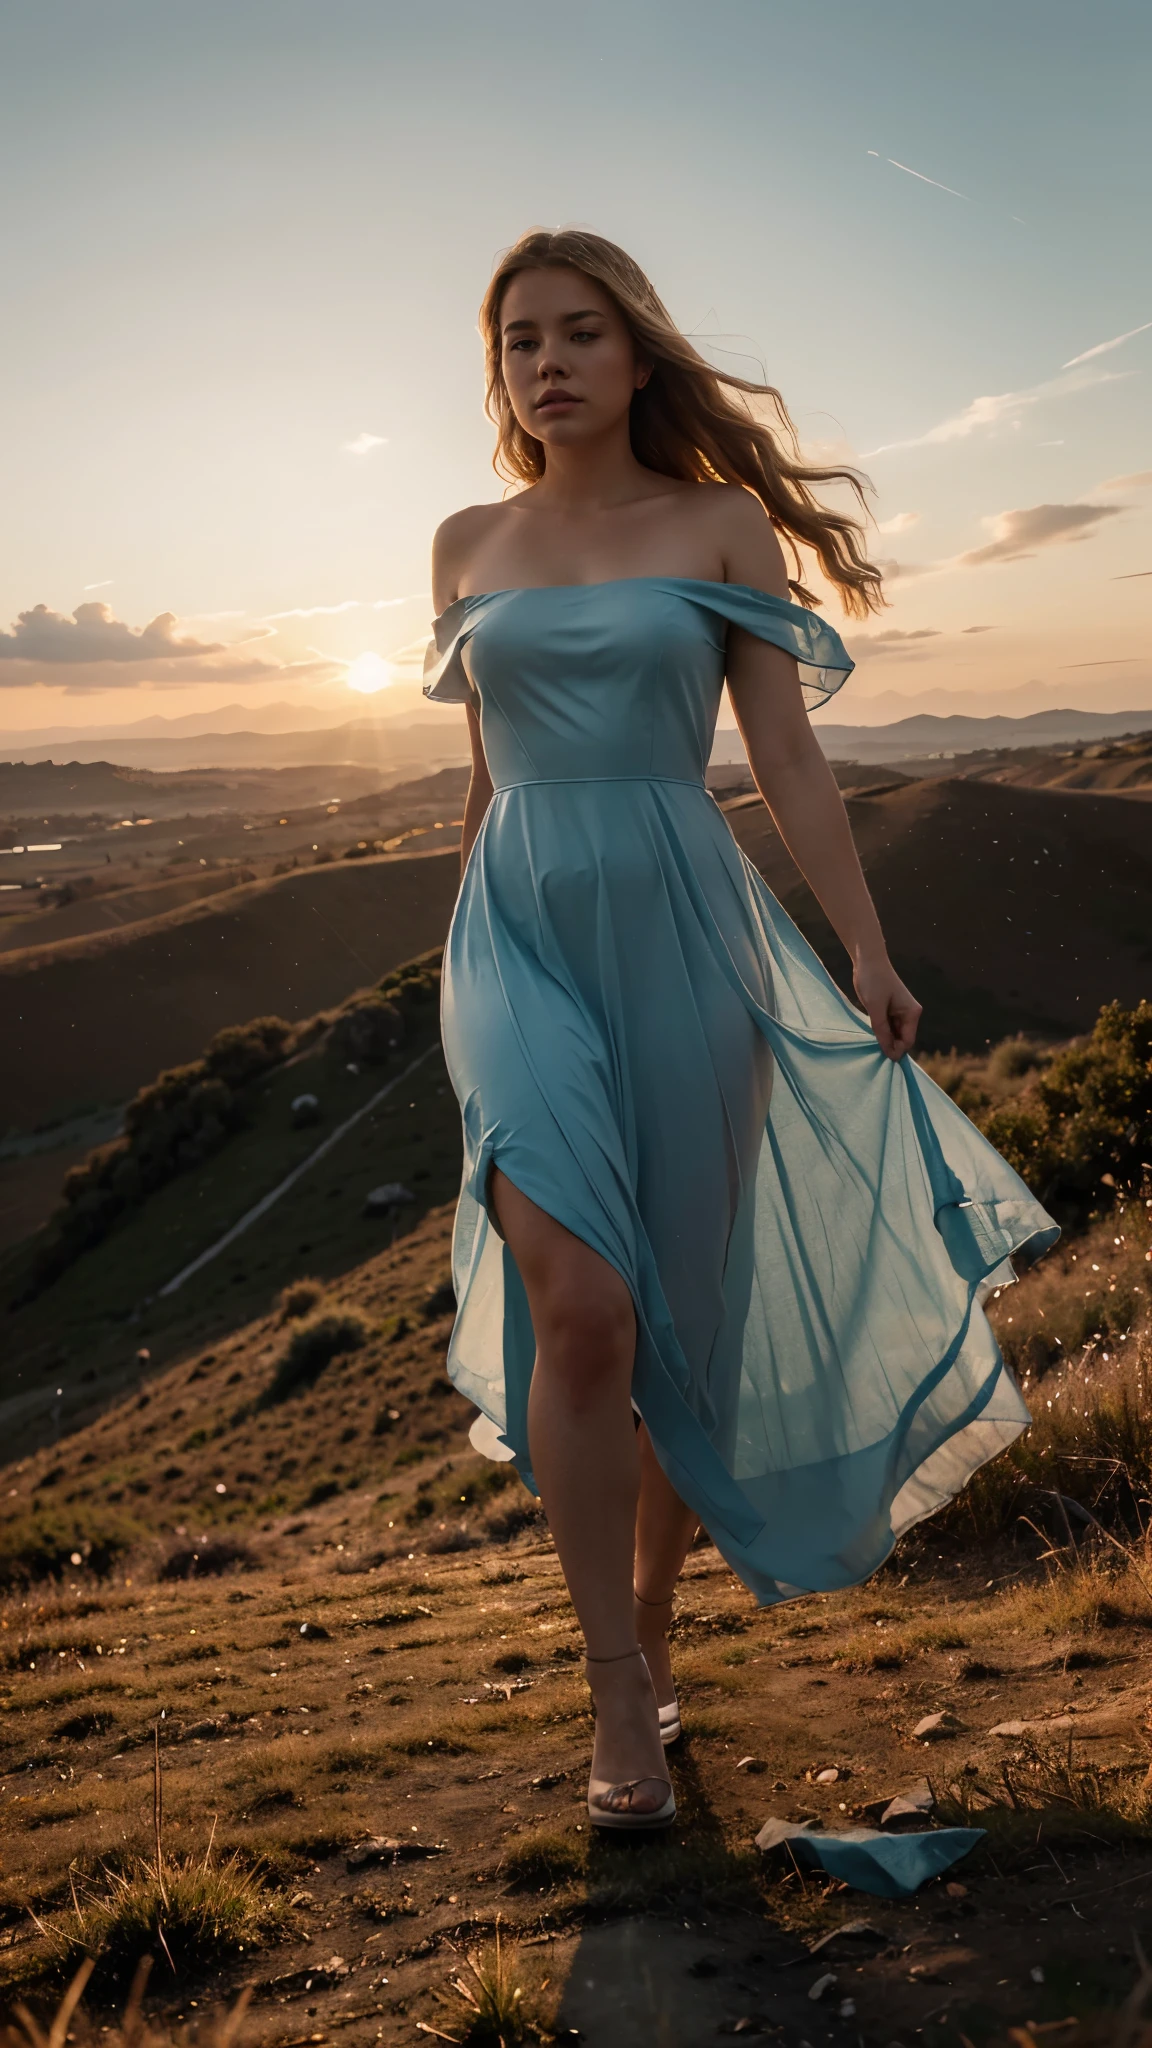 Matt Cavotta의 매혹적인 디지털 작품, Unsplash 콘테스트 우승자, 단순한 얼음색 드레스를 입은 금발 머리의 여성이 등장합니다.. 그녀는 일몰 때 언덕을 우아하게 걷고 있다, 숨막히는 하늘을 배경으로. 사실적인 마법의 장면은 언덕 위에 서 있는 소녀를 보여줍니다., 지는 해에 시선을 고정한 채. The 시네마틱 portrait captures her in a dramatic, 전신샷, 황금시간대를 대비해 그녀의 실루엣을 선보이고 있다. The combination of the ethereal atmosphere and the dramatic lighting creates a mesmerizing 시네마틱 experience., 시네마틱